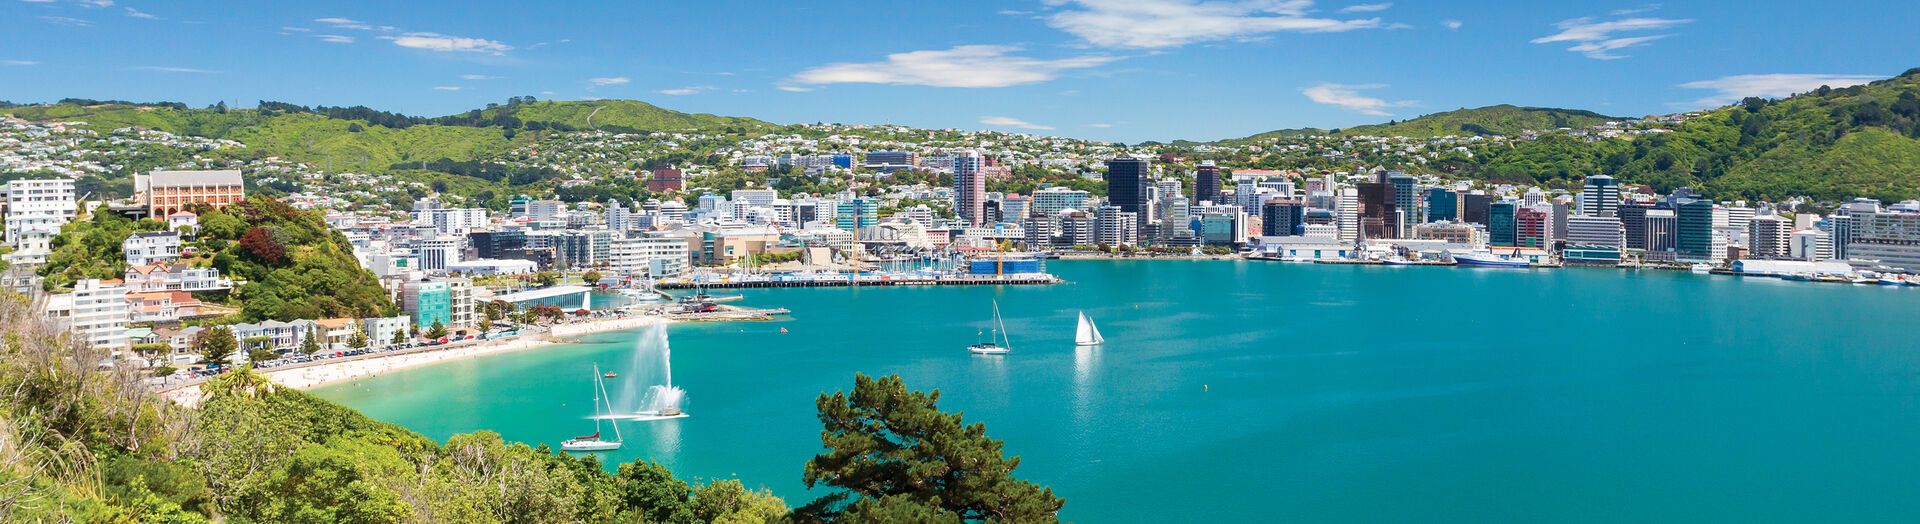 Wellington, New Zealand